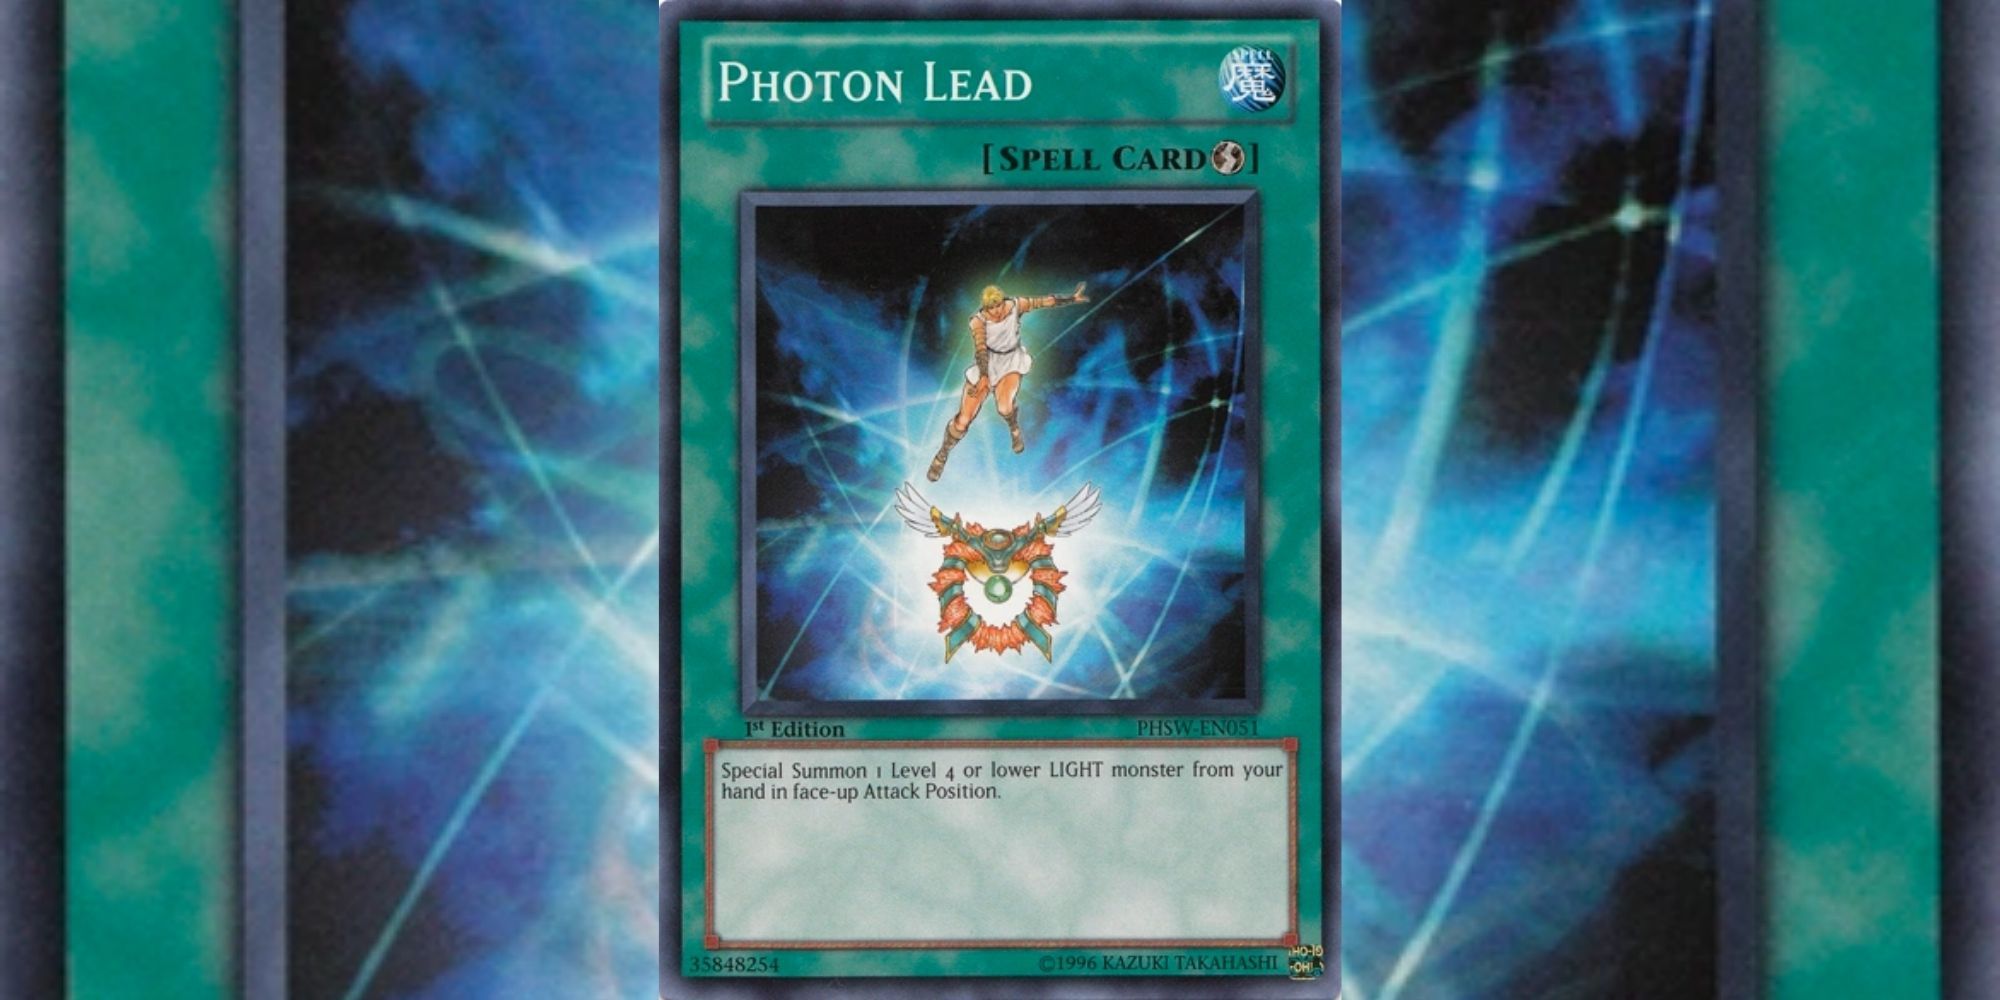 Photon Lead card in Yu-Gi-Oh!